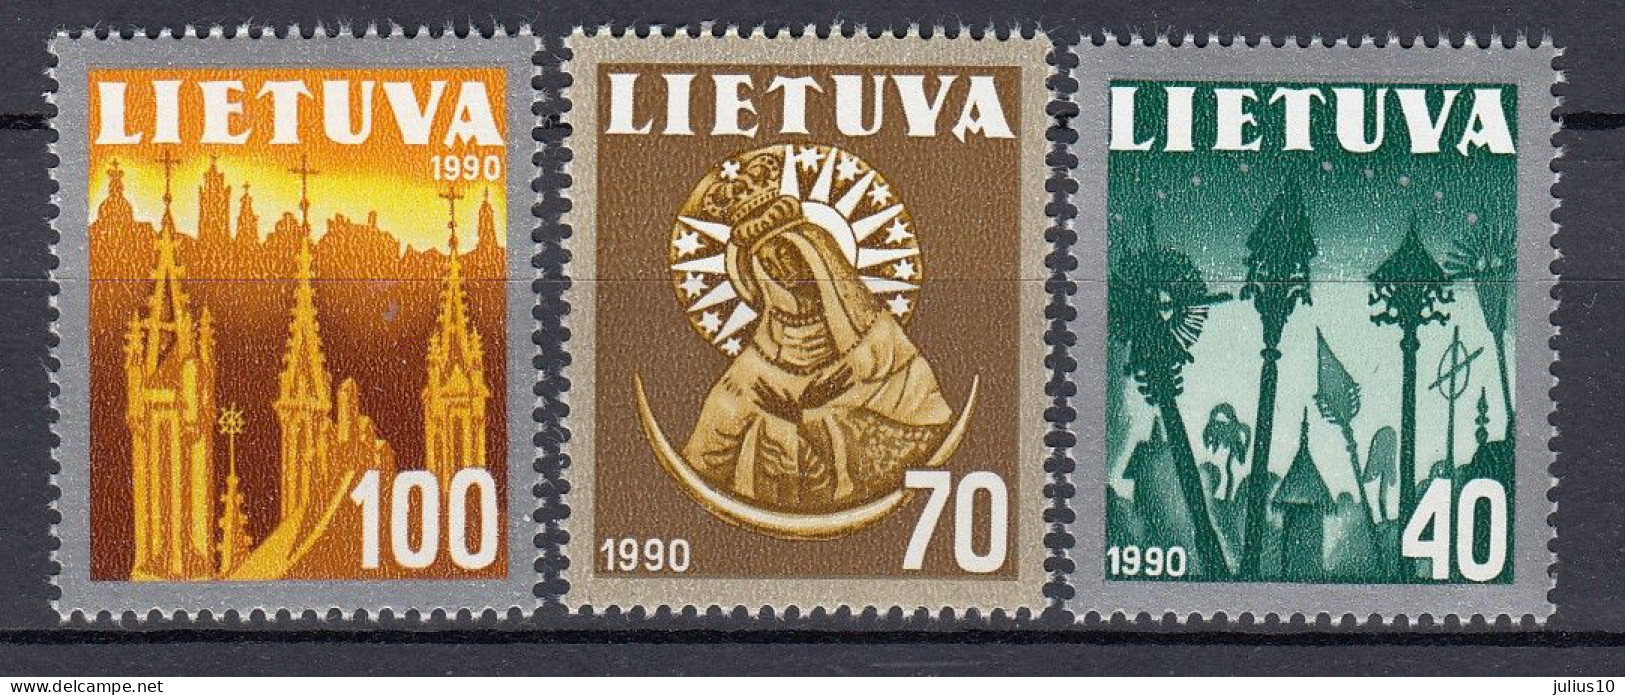 LITHUANIA 1991 National Symbols MNH(**) Mi 474-476 #Lt1170 - Lithuania